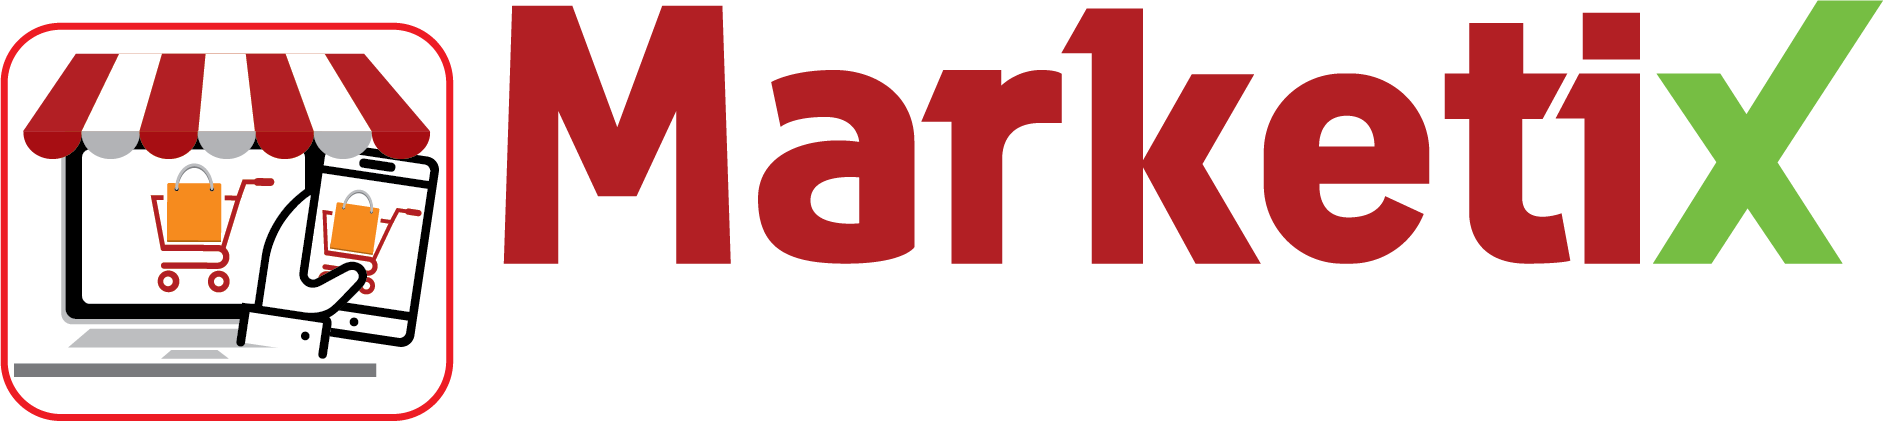 marketix logo.png (52 KB)